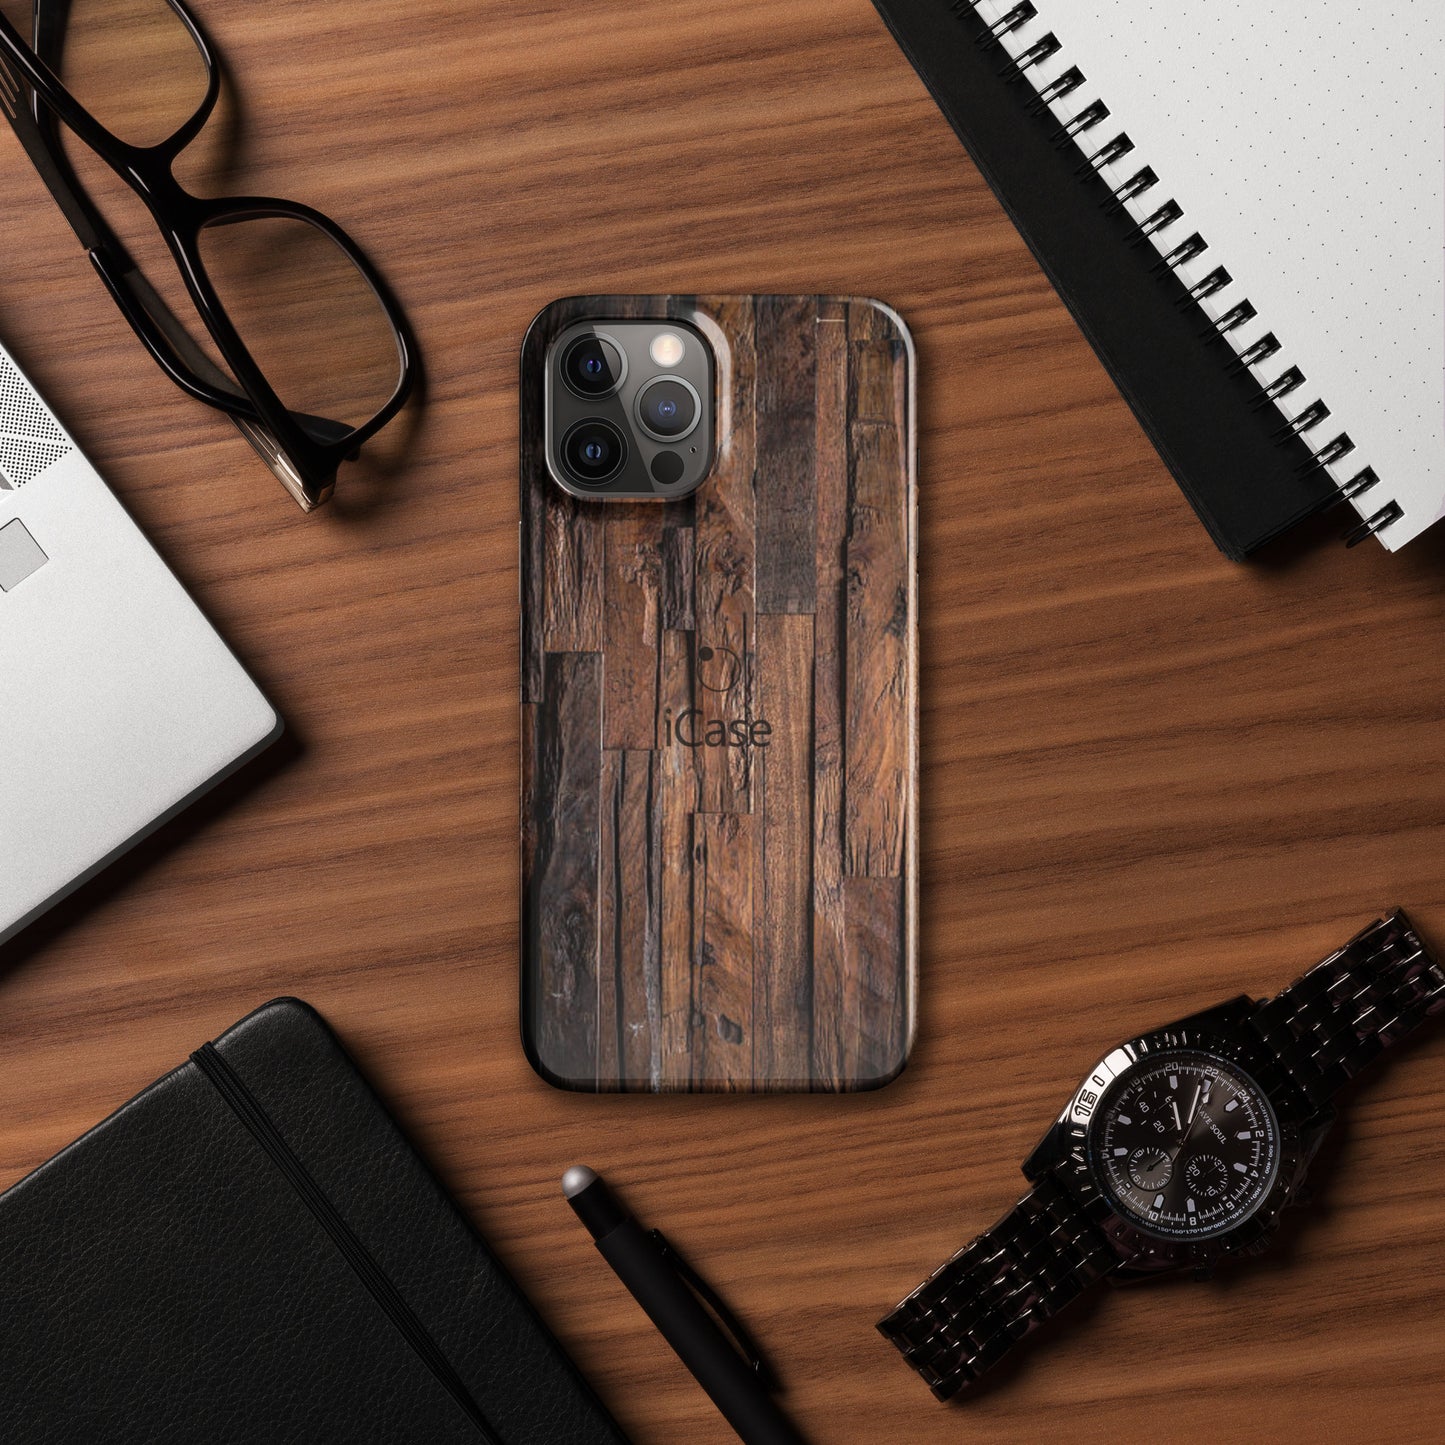 iCase Old Wood II SnapCase iPhone® case